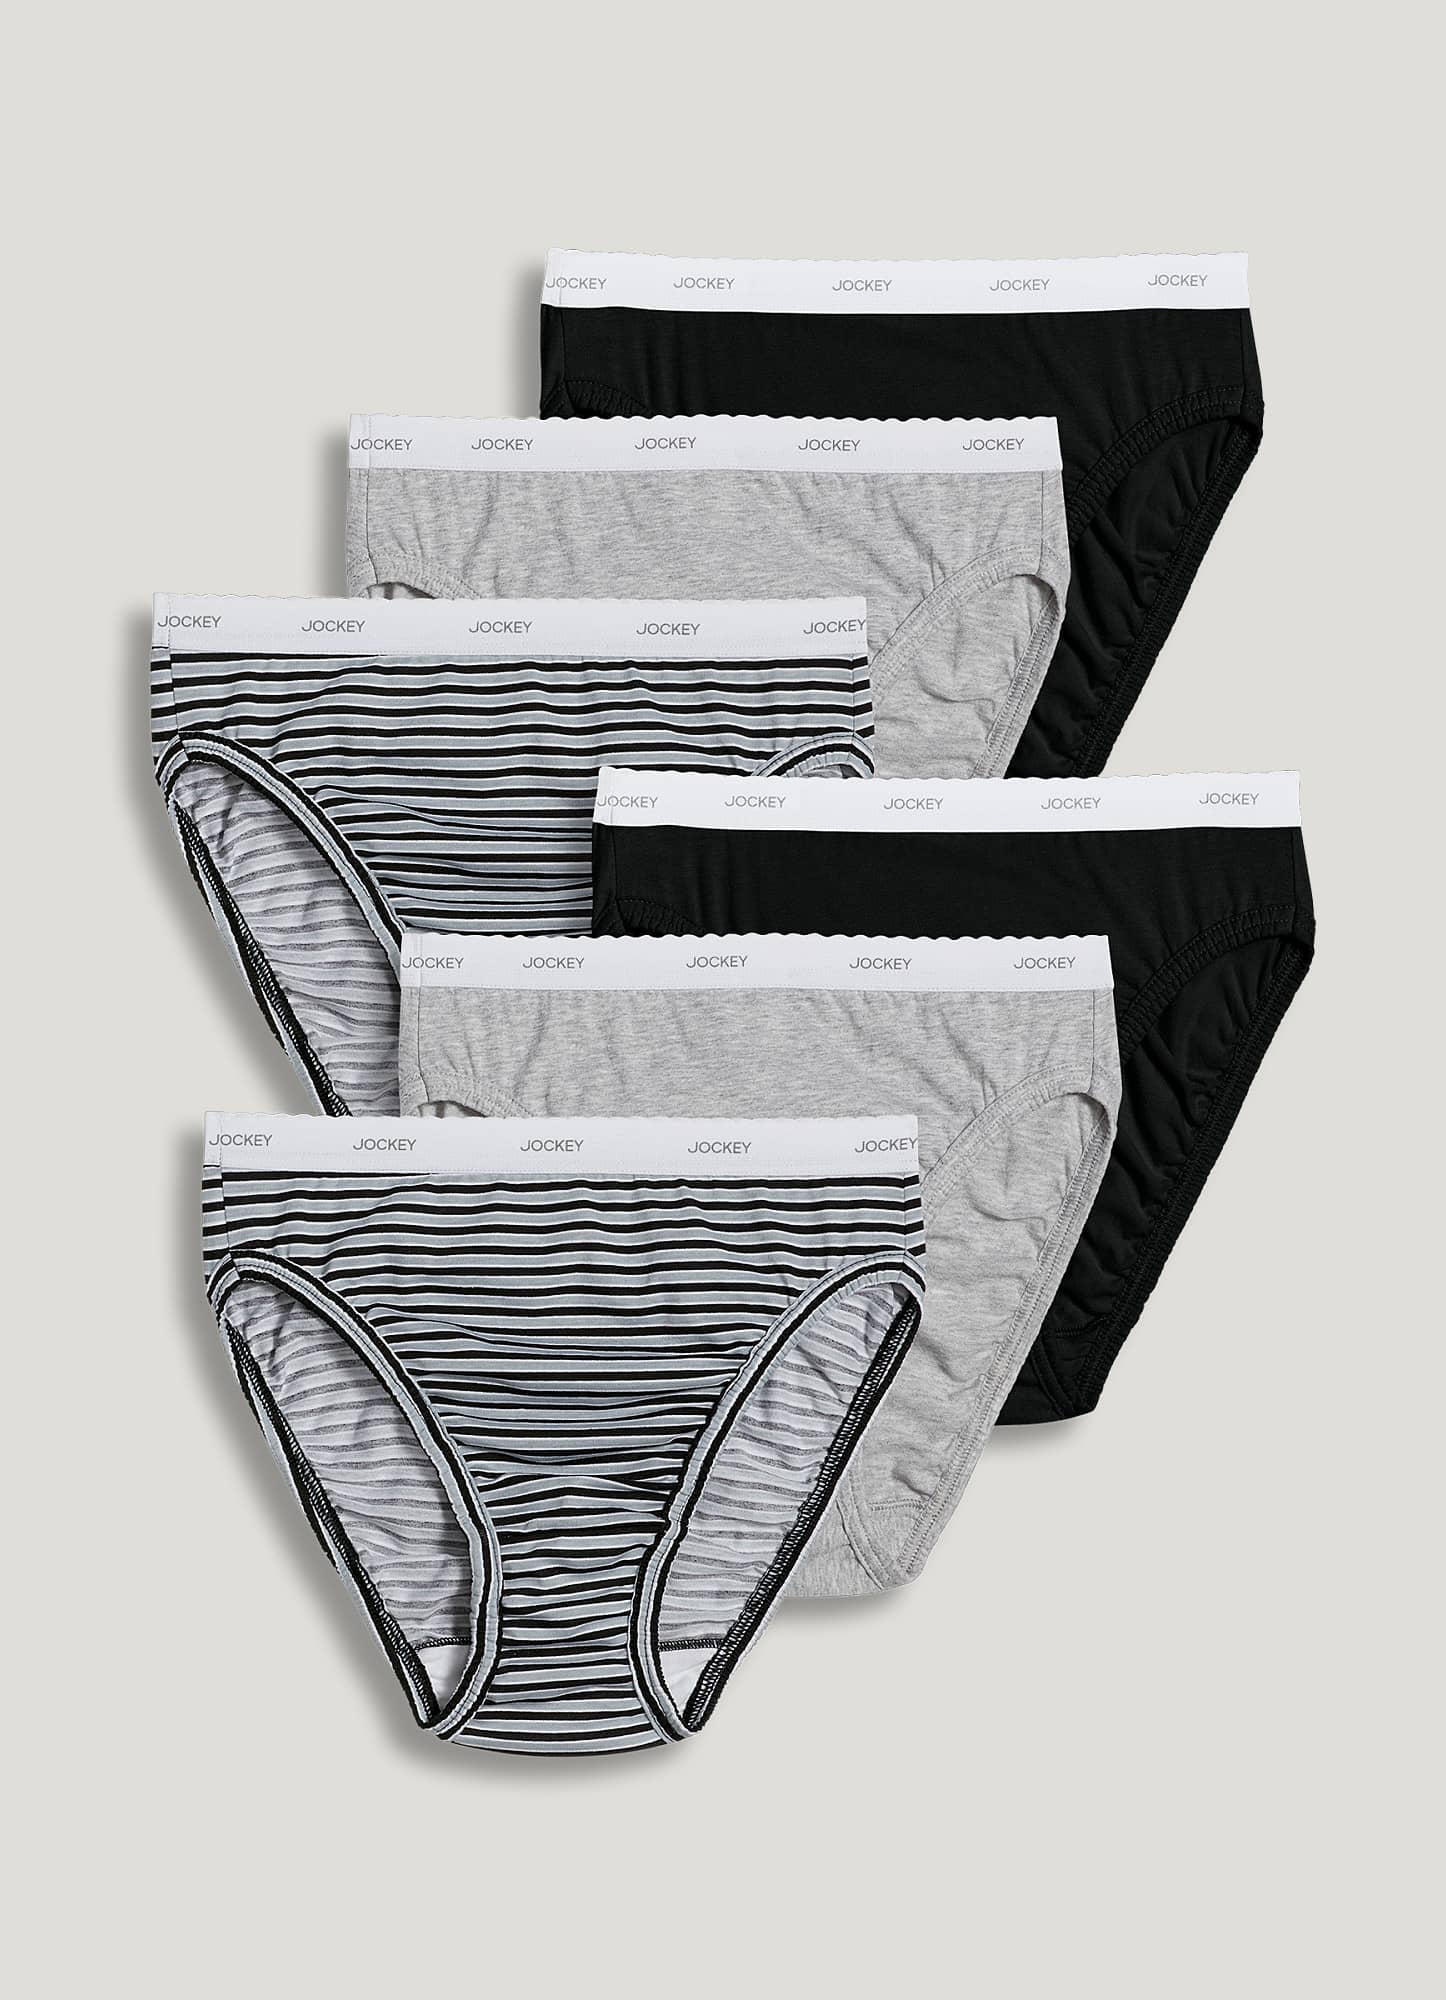 Jockey French Cut Panties Underwear Women's Size 5 P 36-38” New Vintage  1998 NOS